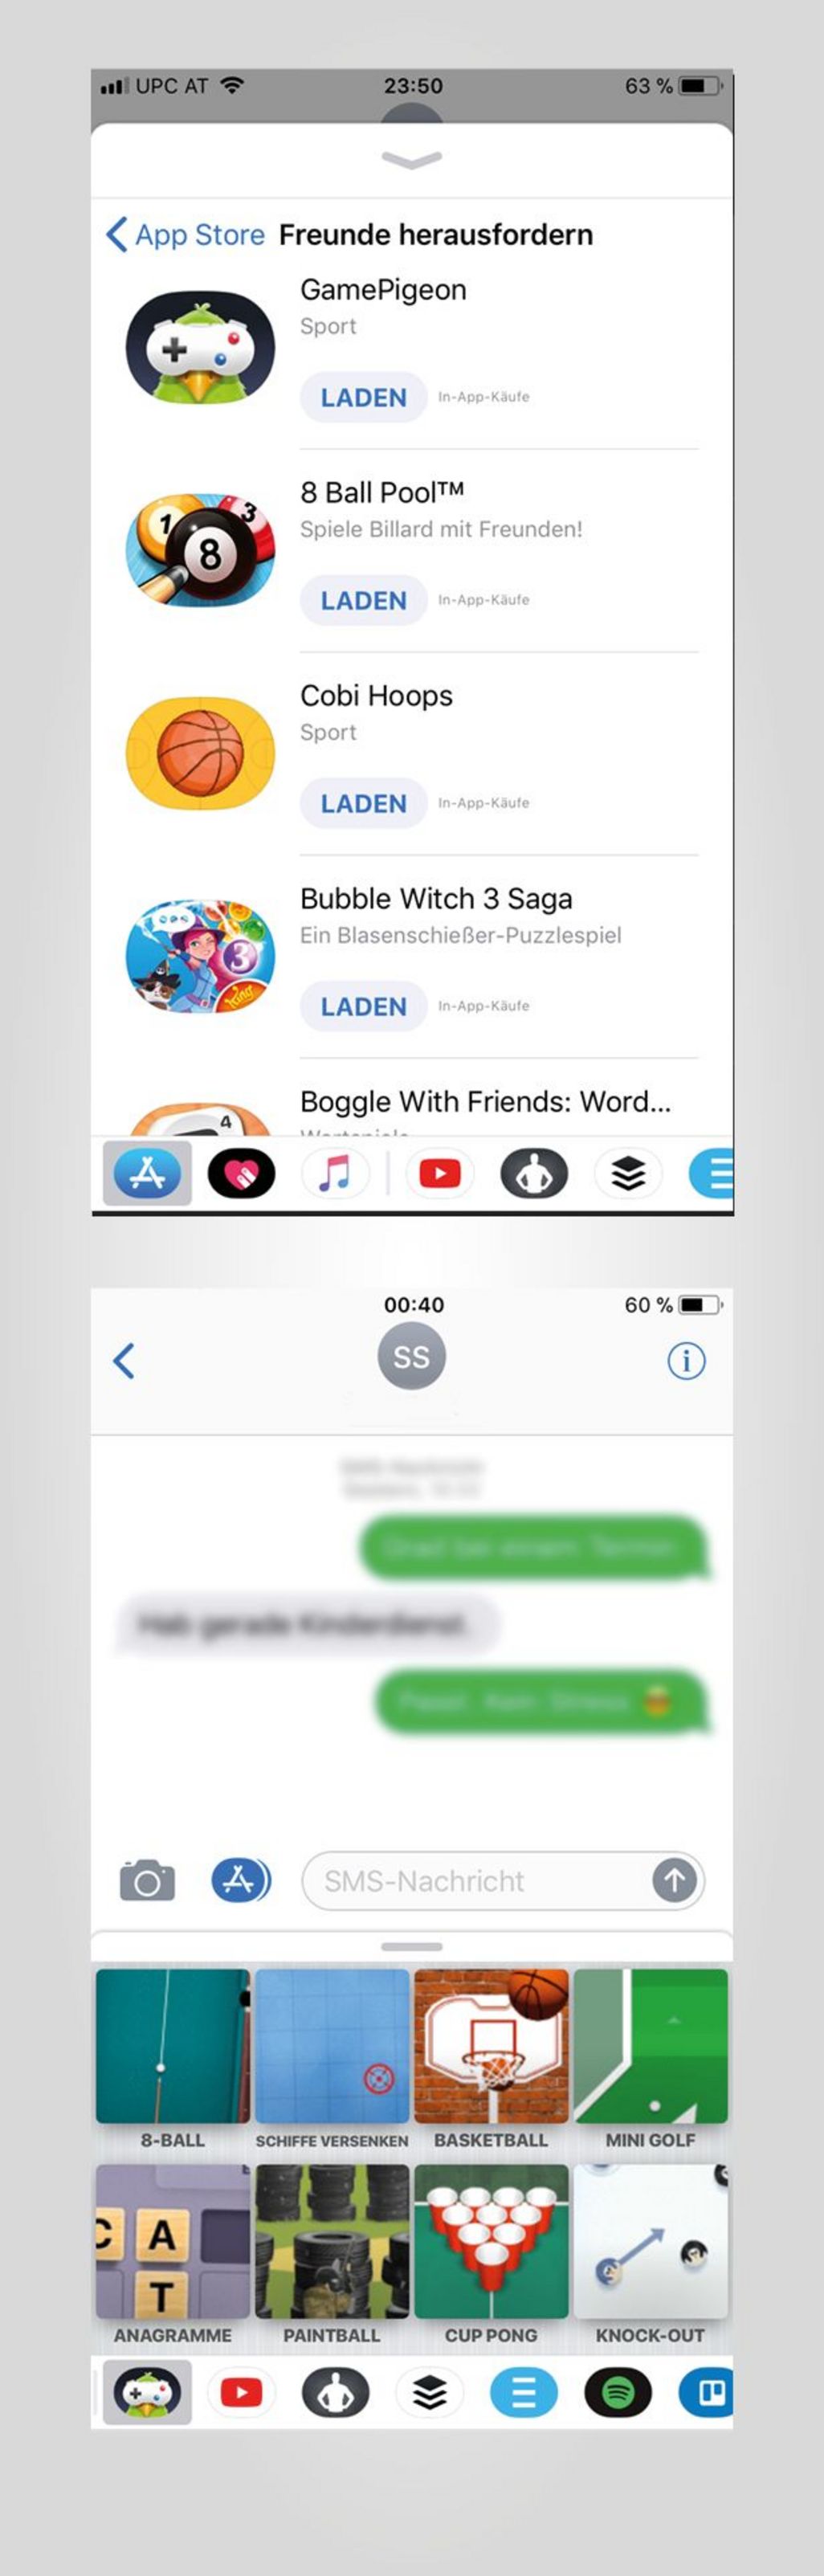 Über Apples Messenger-App kann man mit Freunden coole Games spielen.